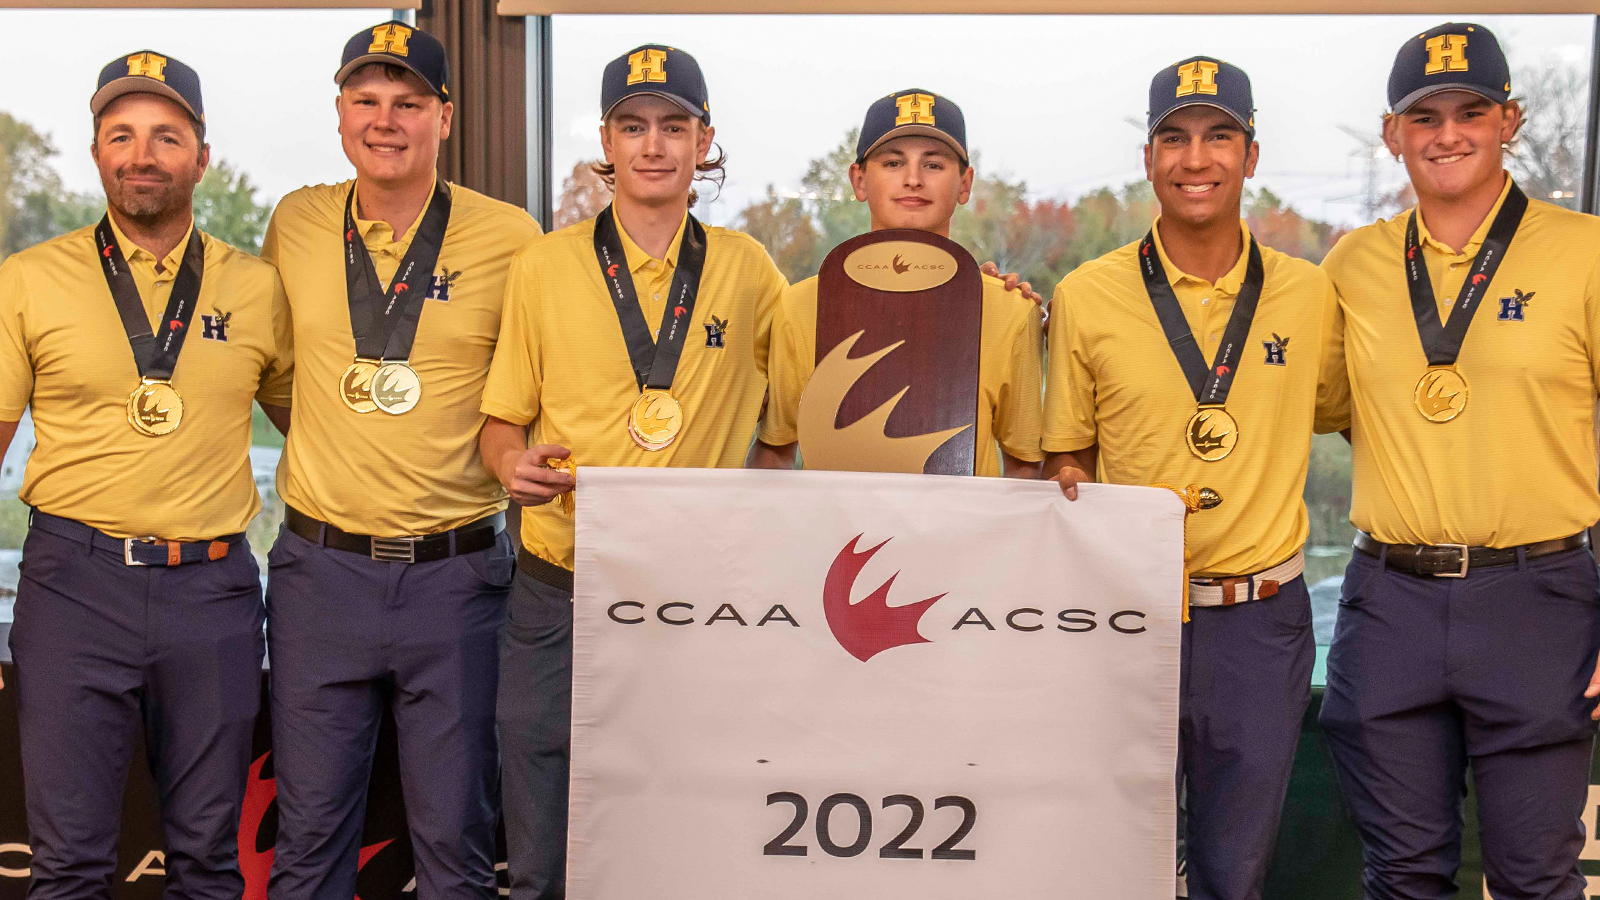 Bremer, McCallum and Hawks earn CCAA Golf Gold